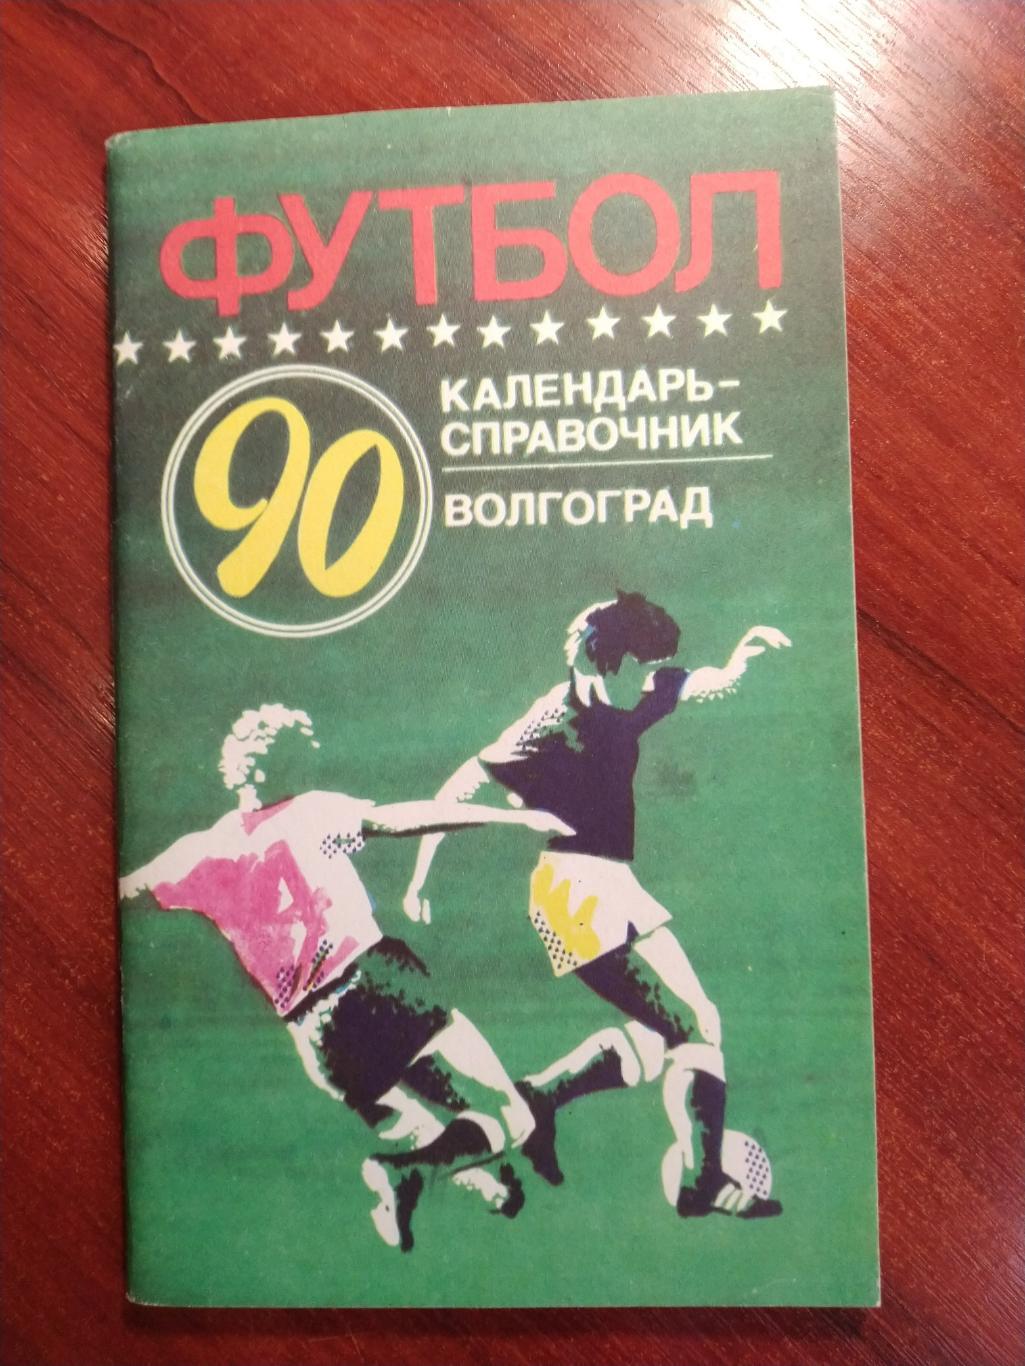 Справочник -календарь Футбол 1990 Волгоград